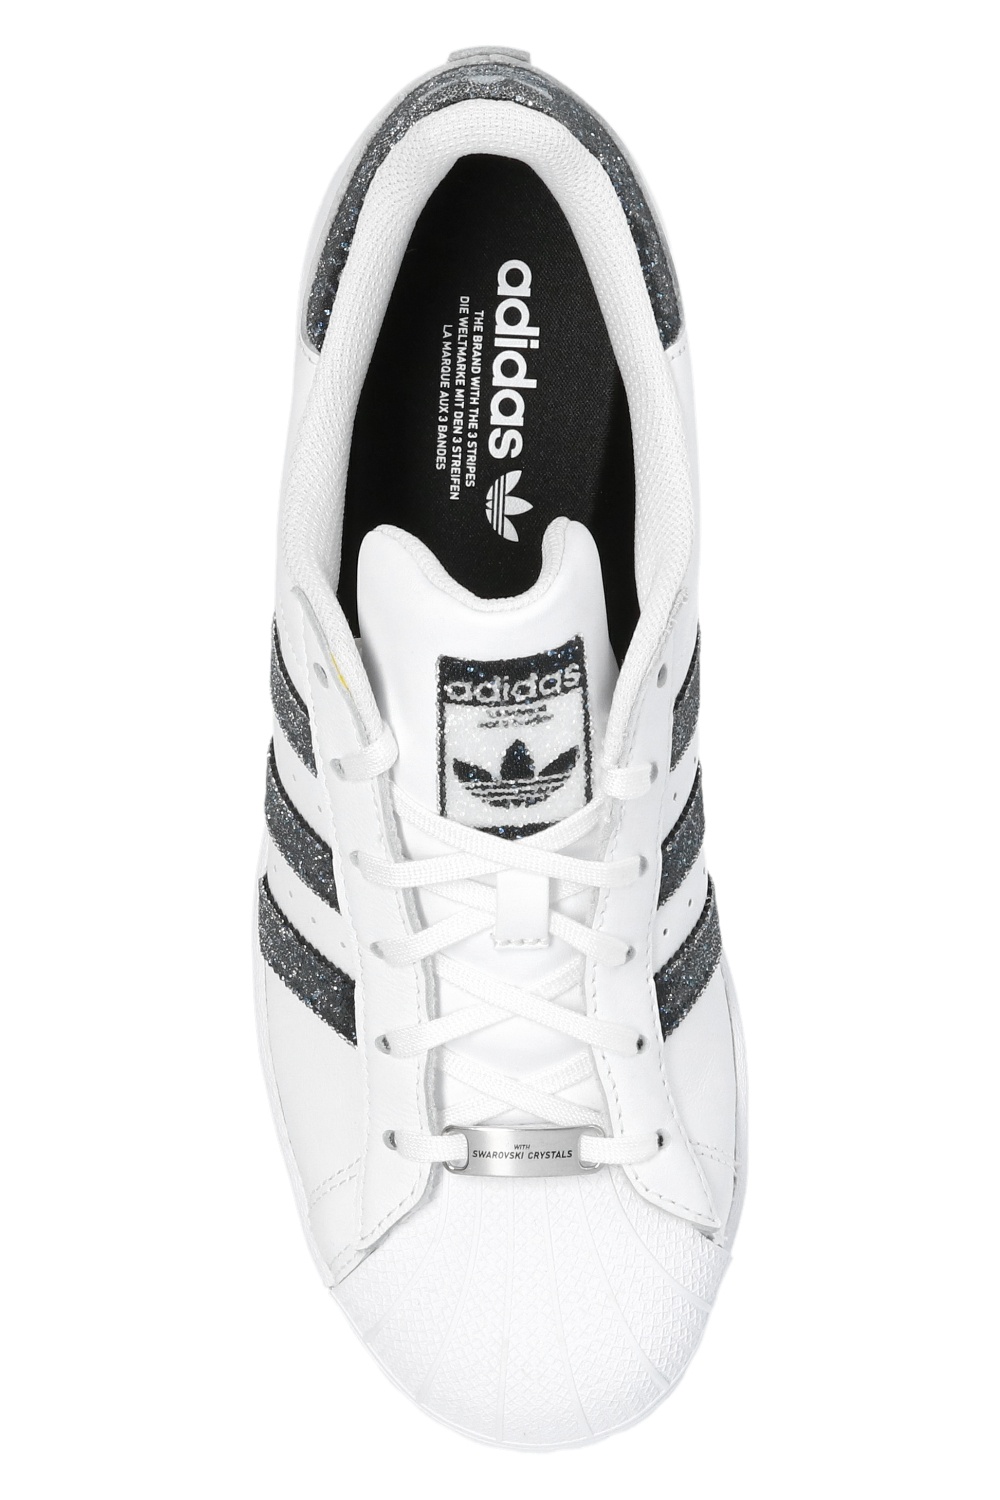 White Originals Vitkac ADIDAS Germany sneakers - \'Superstar\'